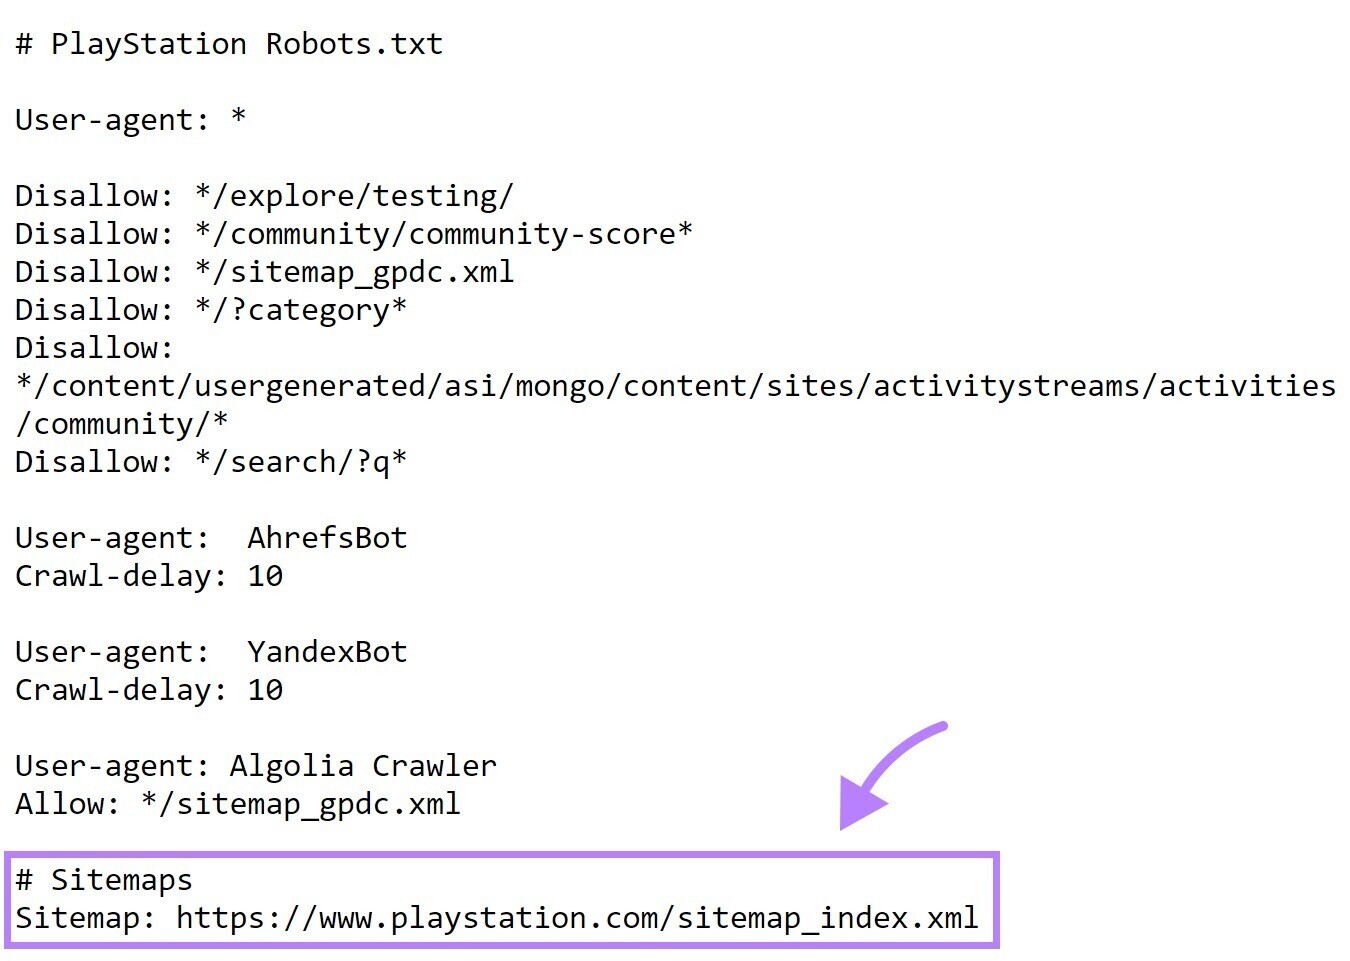 an example of accessing robots.txt file through "yoursite.com/robots.txt" URL